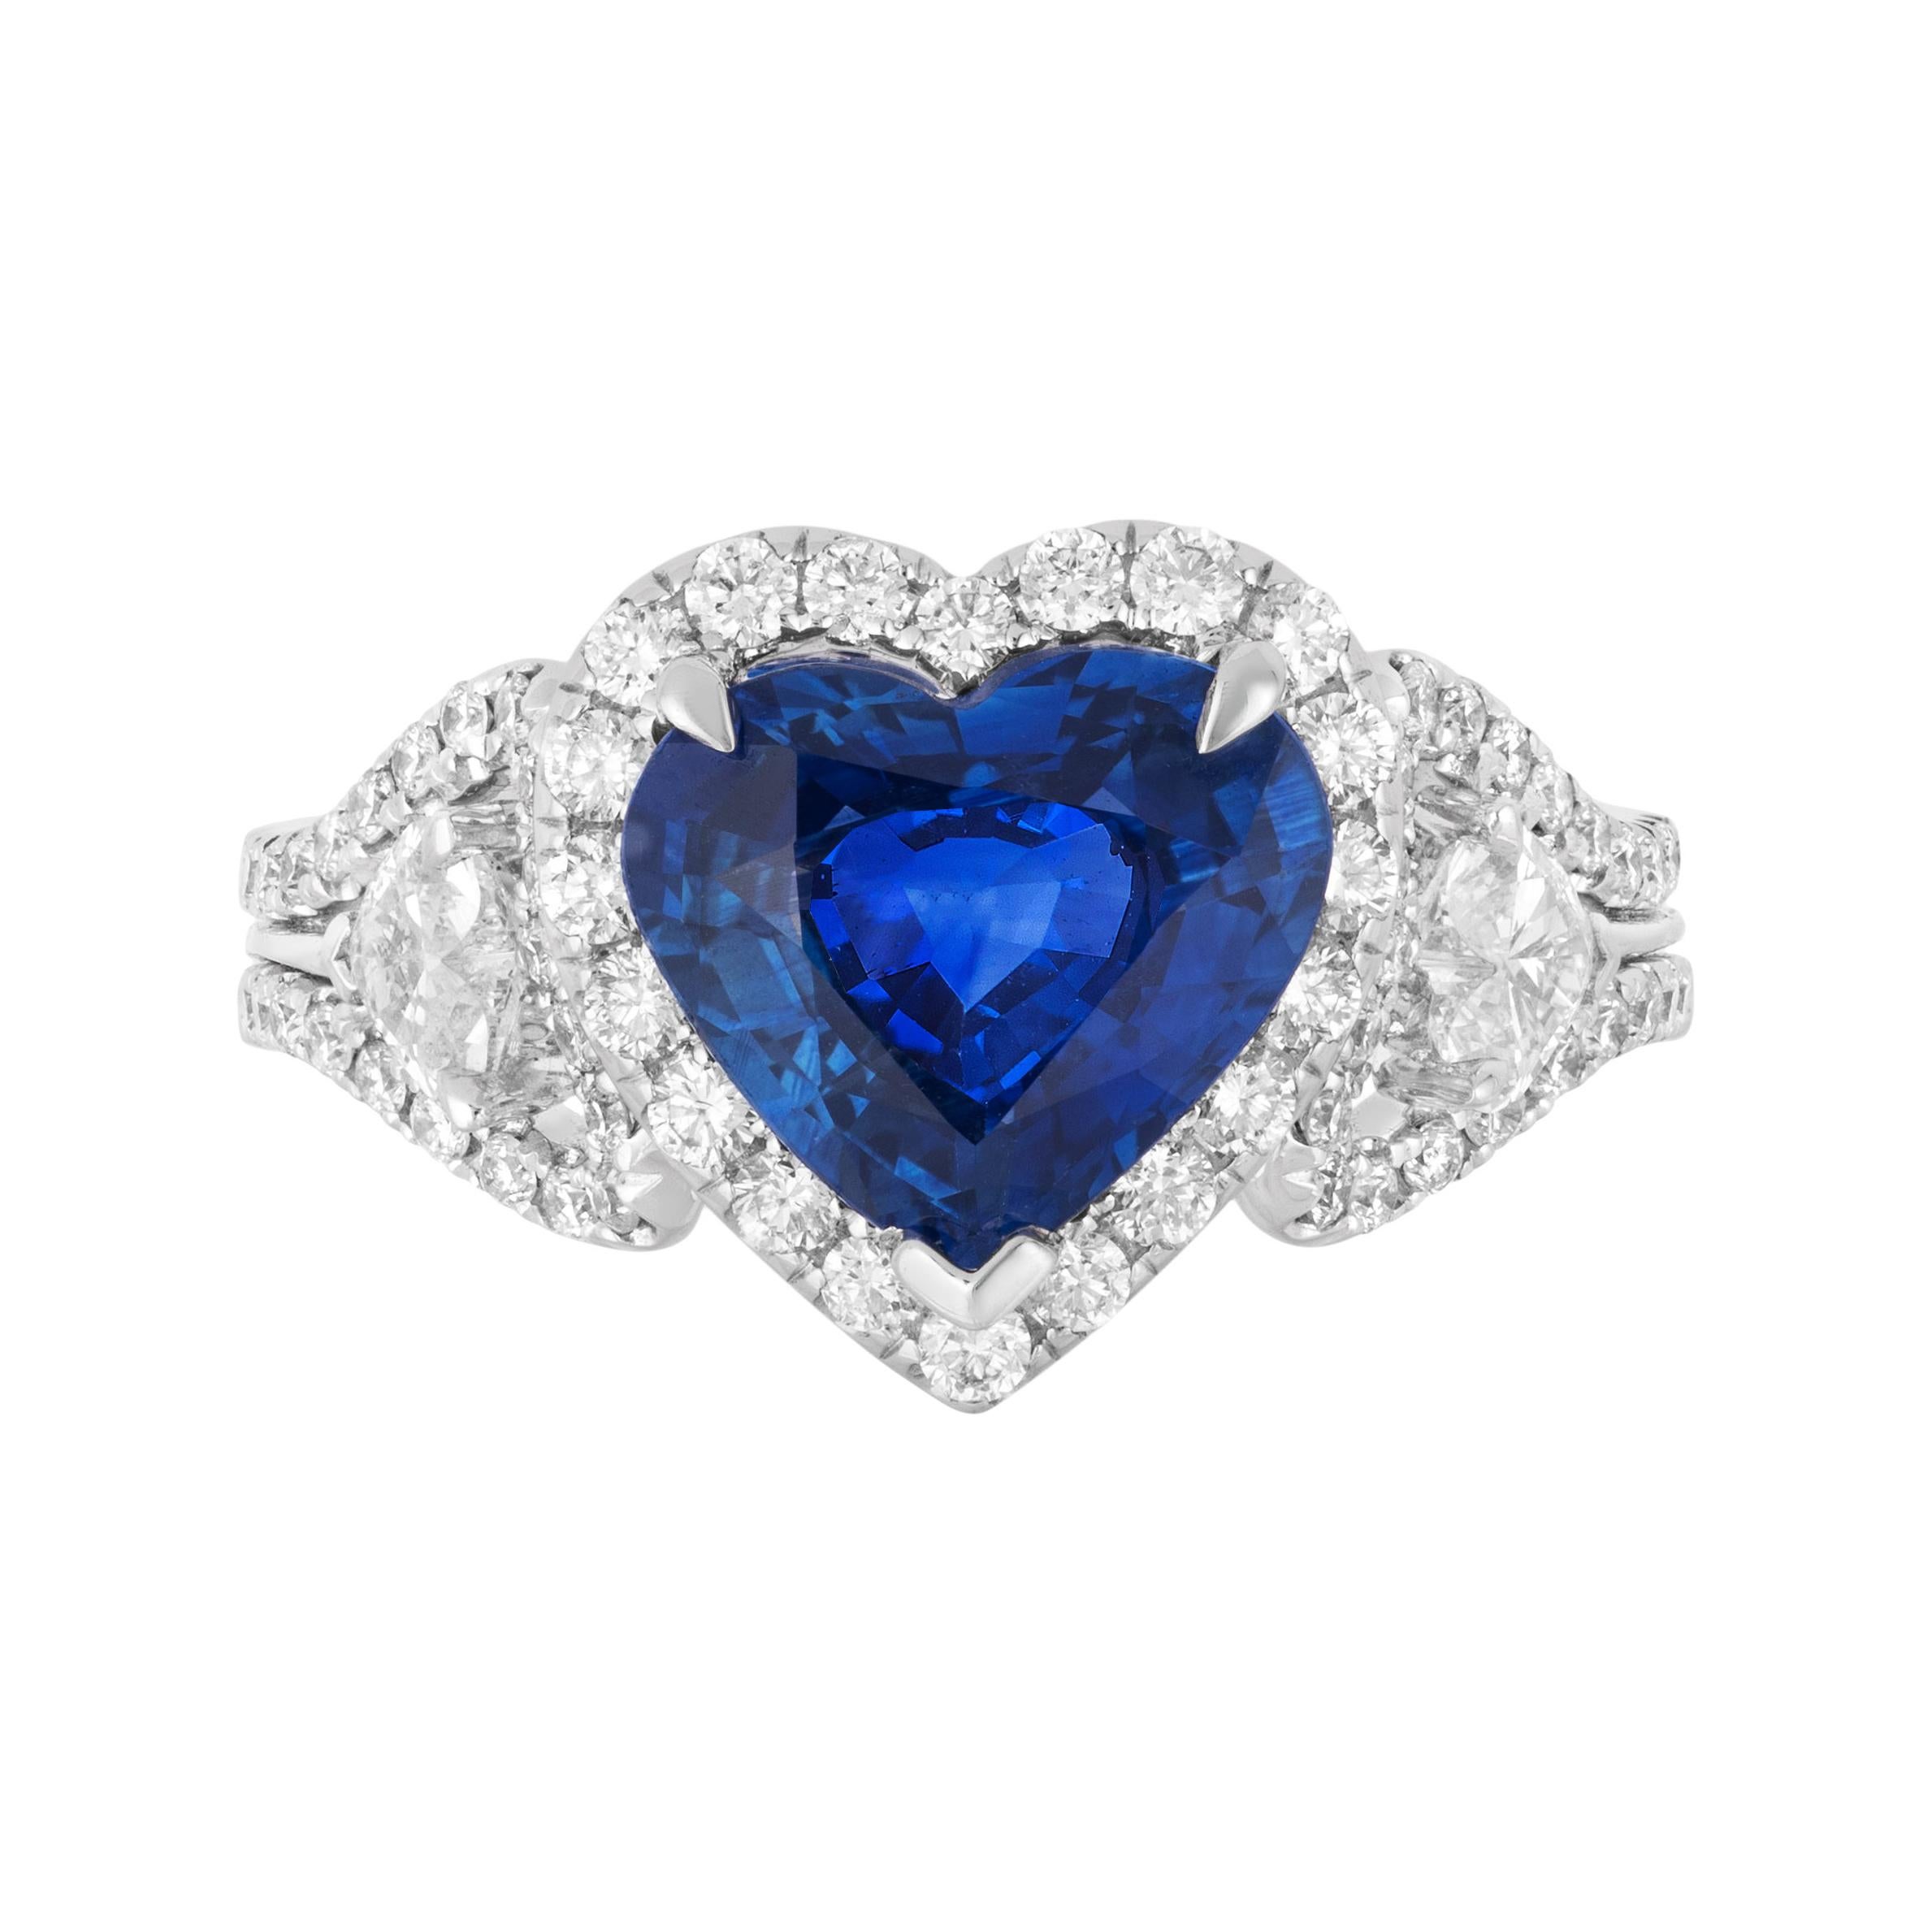 Andreoli CDC Certified 2.60 Carat Ceylon Blue Sapphire Diamond Heart Shape Ring For Sale